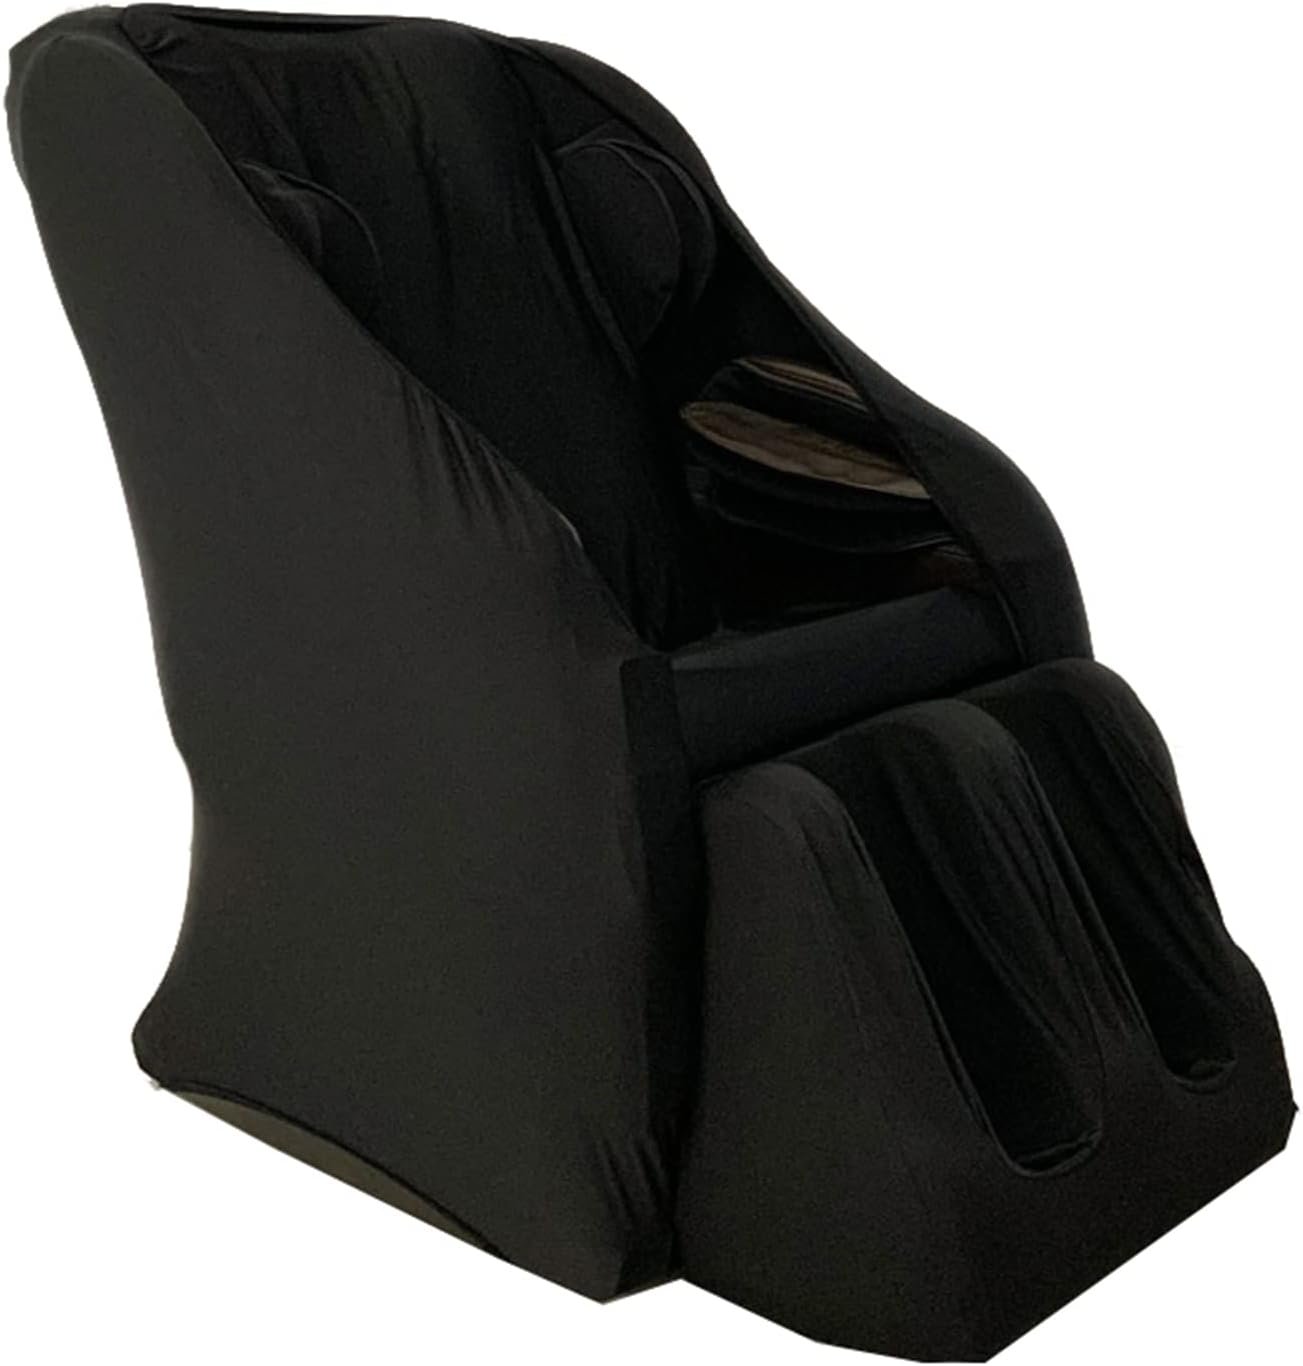 Massage Chair Cover, Full Body Shiatsu Massage Chair Protective Cover Washable Stretch Fabric Dustproof Massage Chair Protector Cover,Black,Package 3